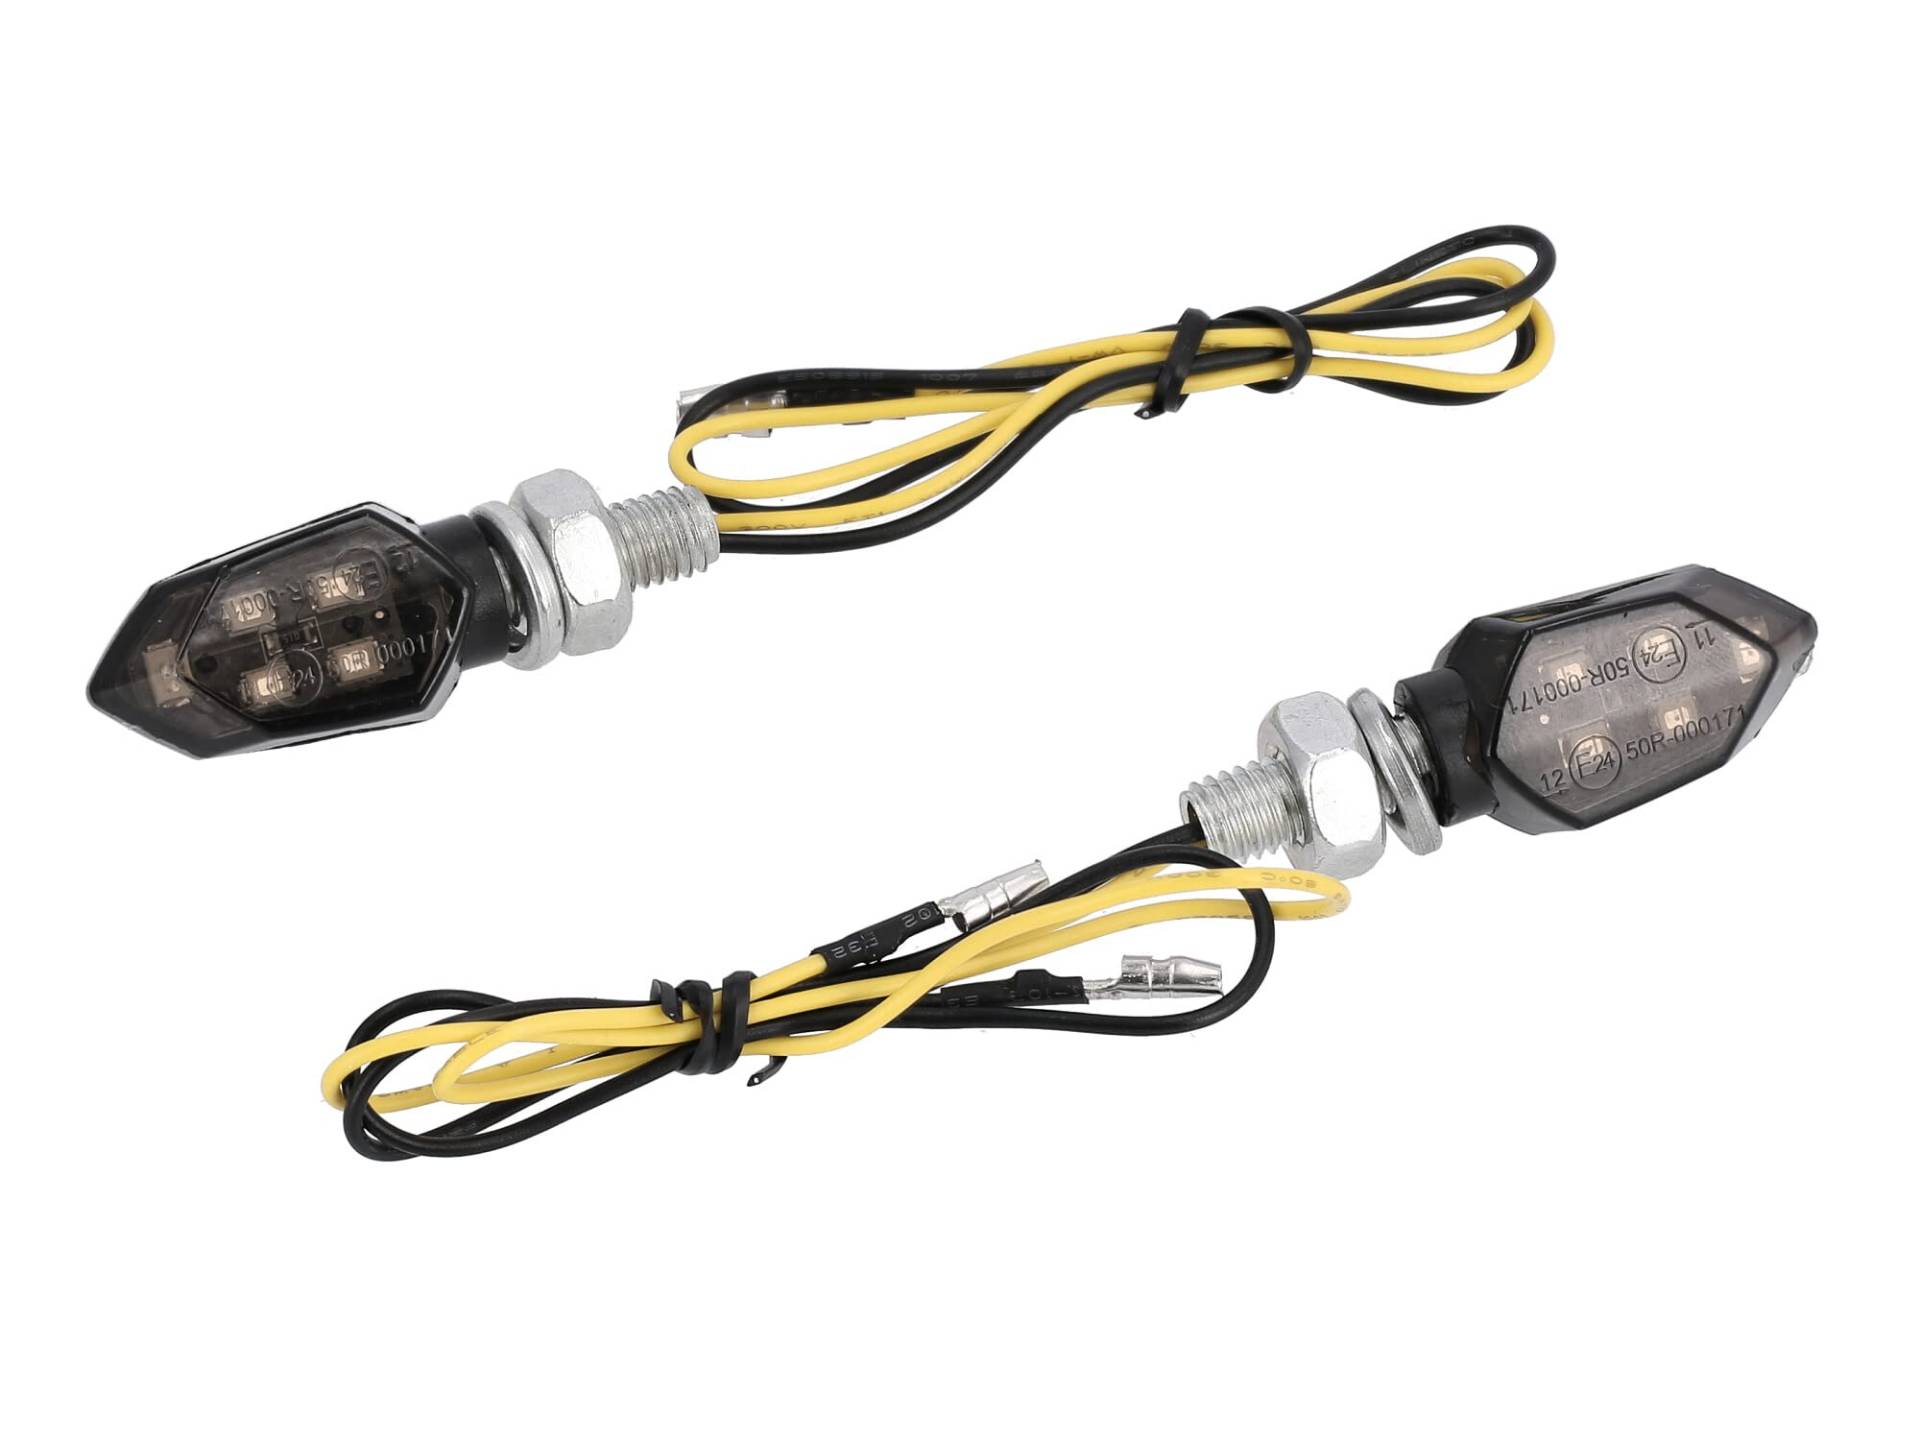 Set: 2x Mini-Blinker 12V LED - für Moped und Motorrad von VEBCO